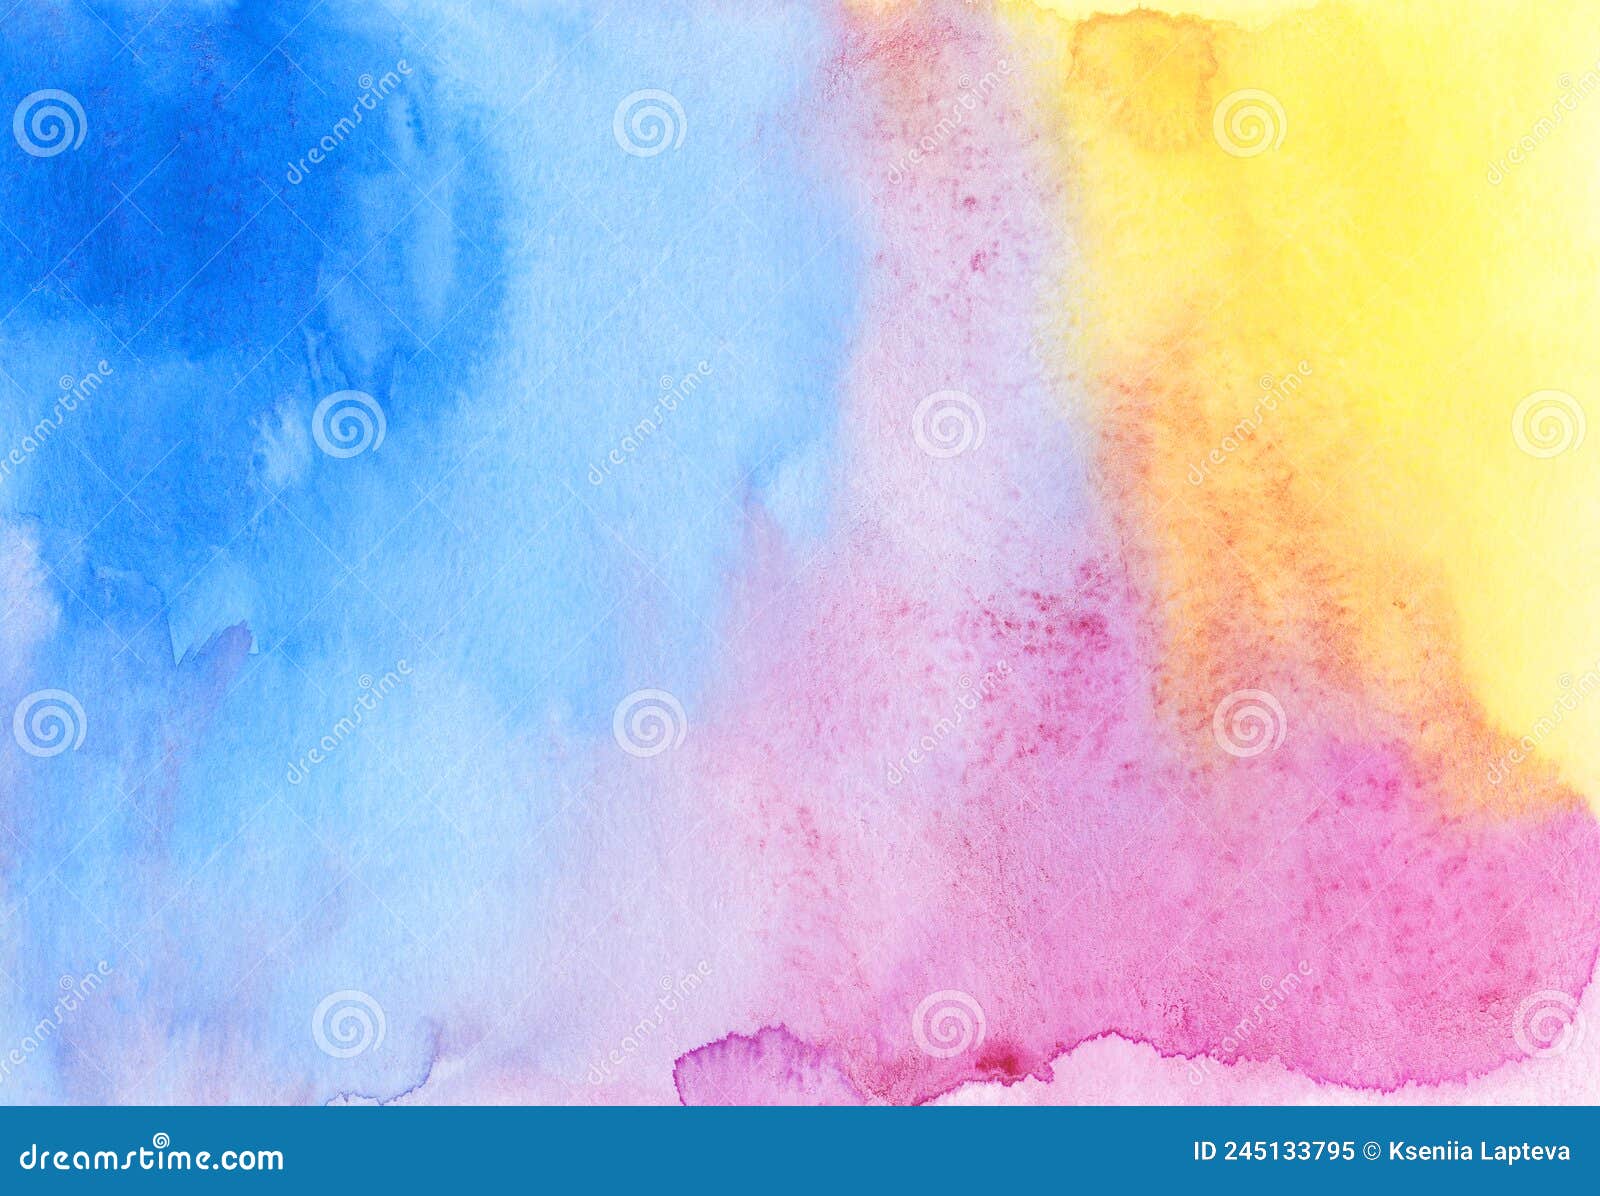 Watercolor Pastel Colorful Background Texture. Watercolour Blue, Pink ...